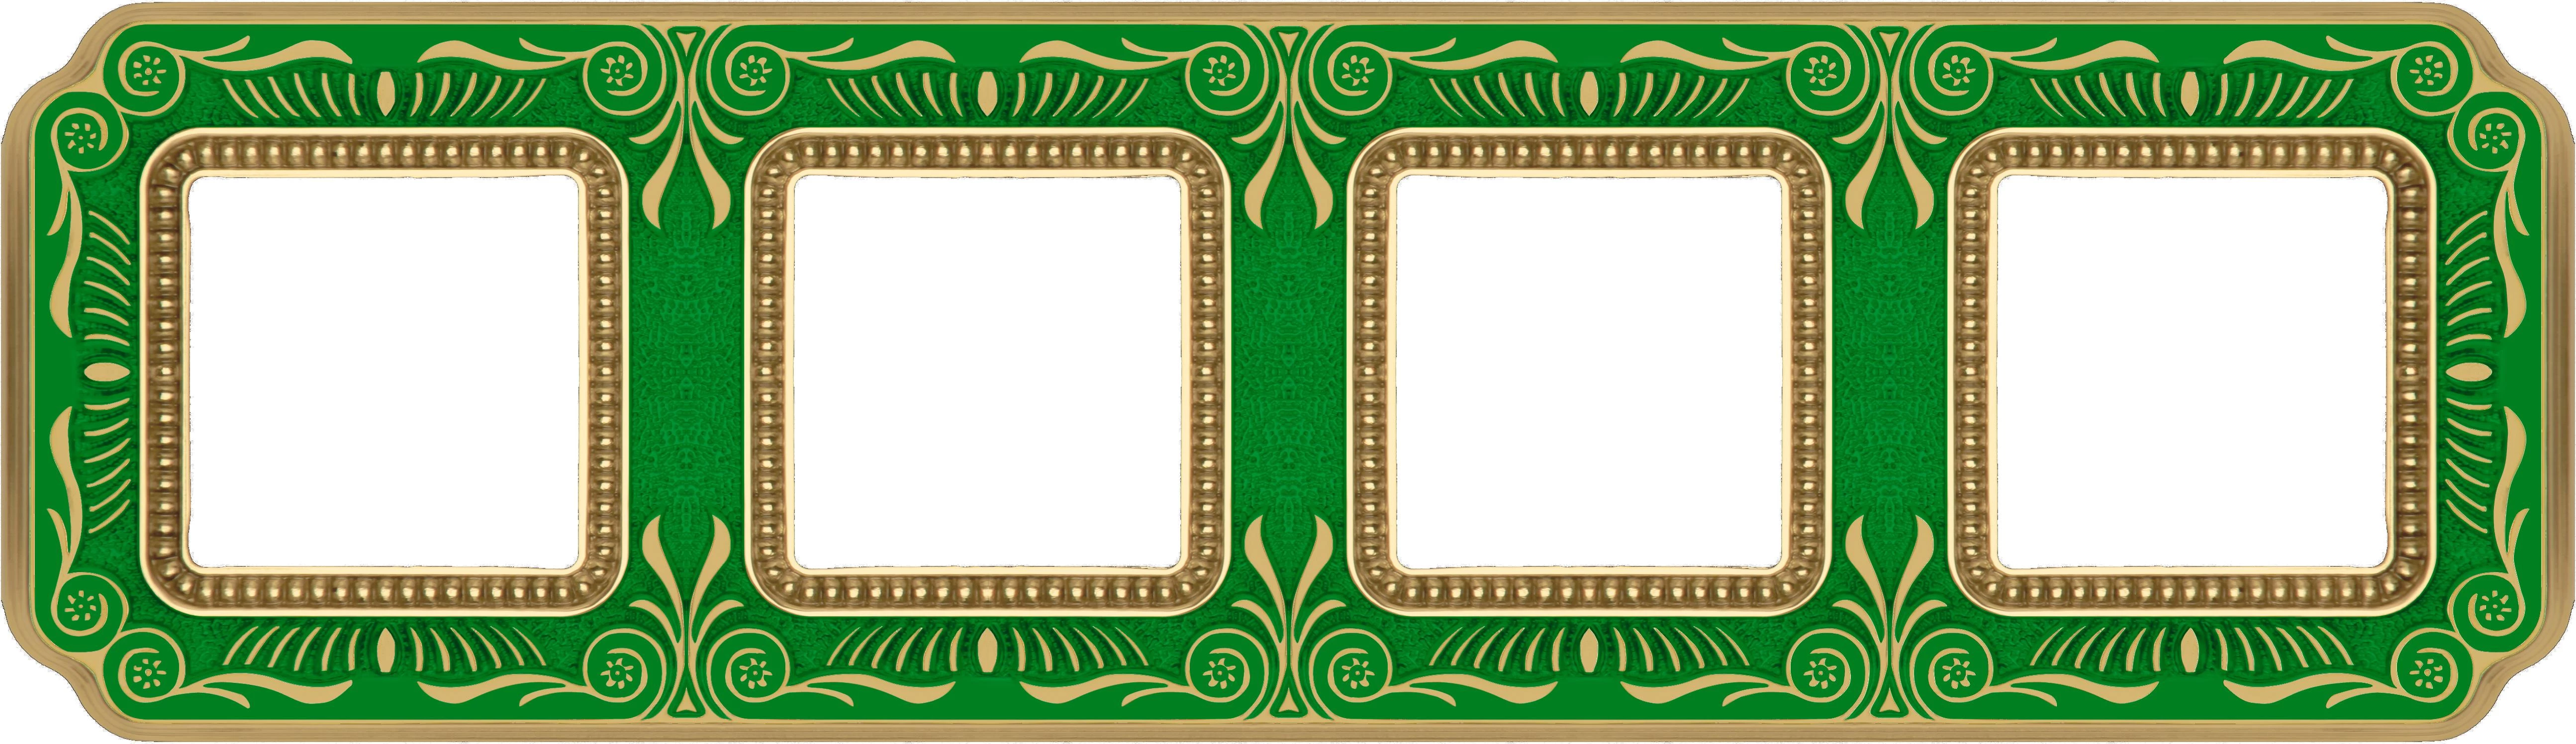  артикул FD01364VEEN название Рамка 4-ая (четверная), цвет Изумрудно-зеленый, Firenze, Fede